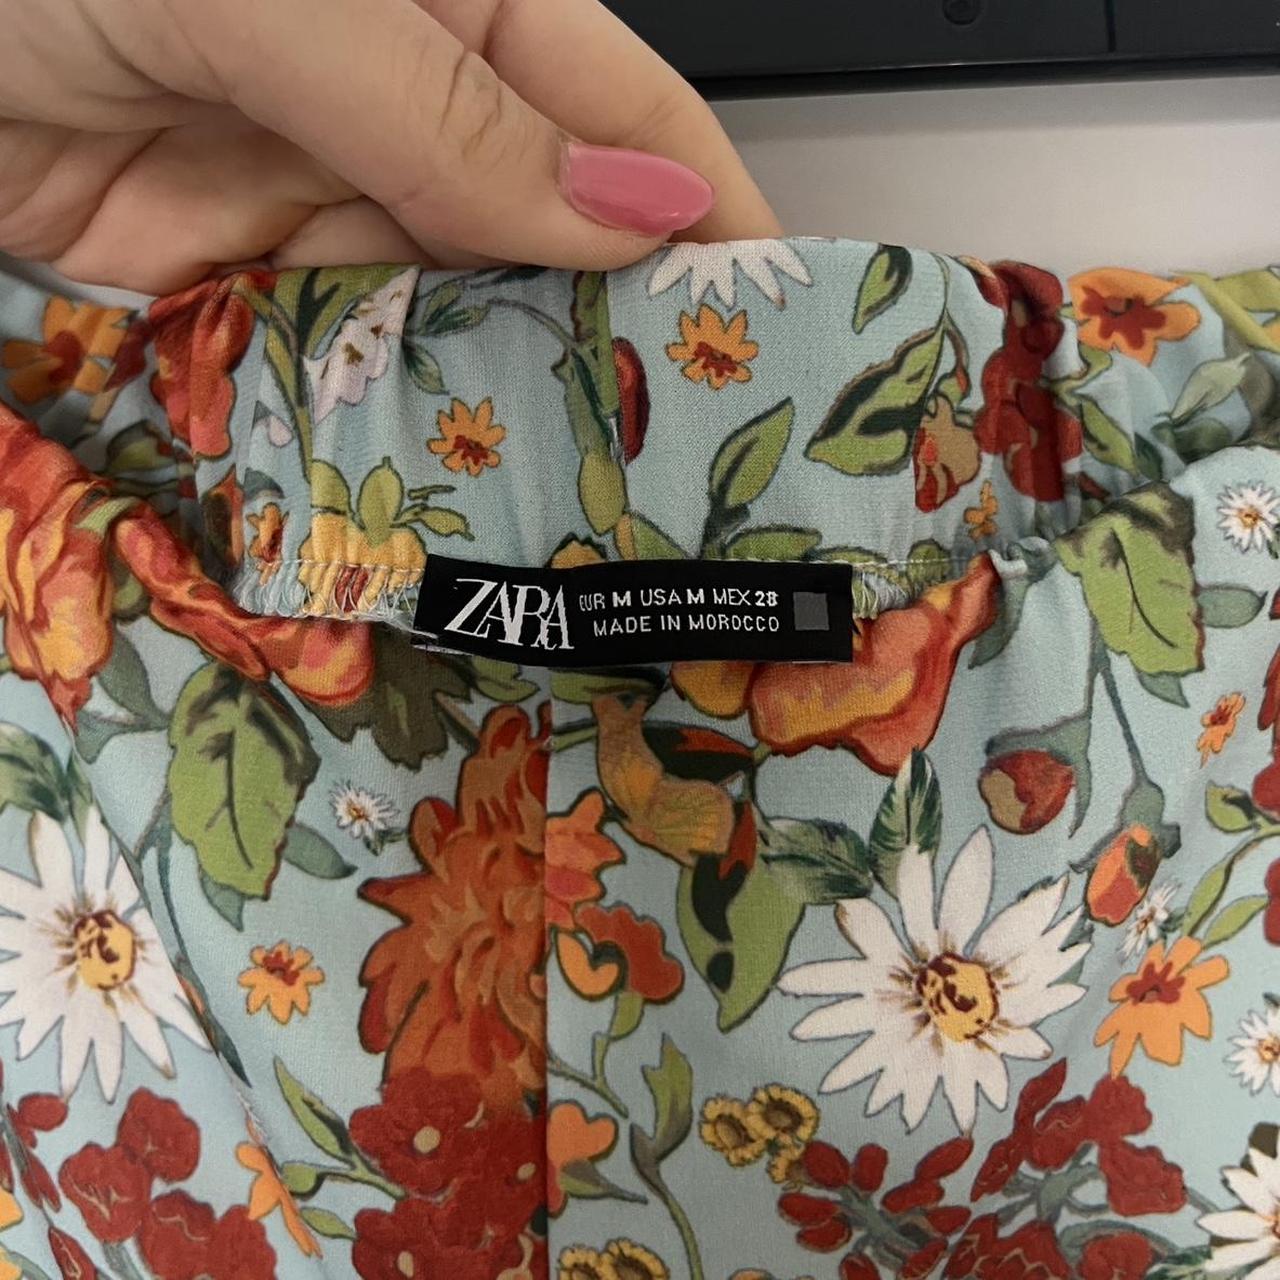 Zara size medium wide leg floral palazzo pants! - Depop